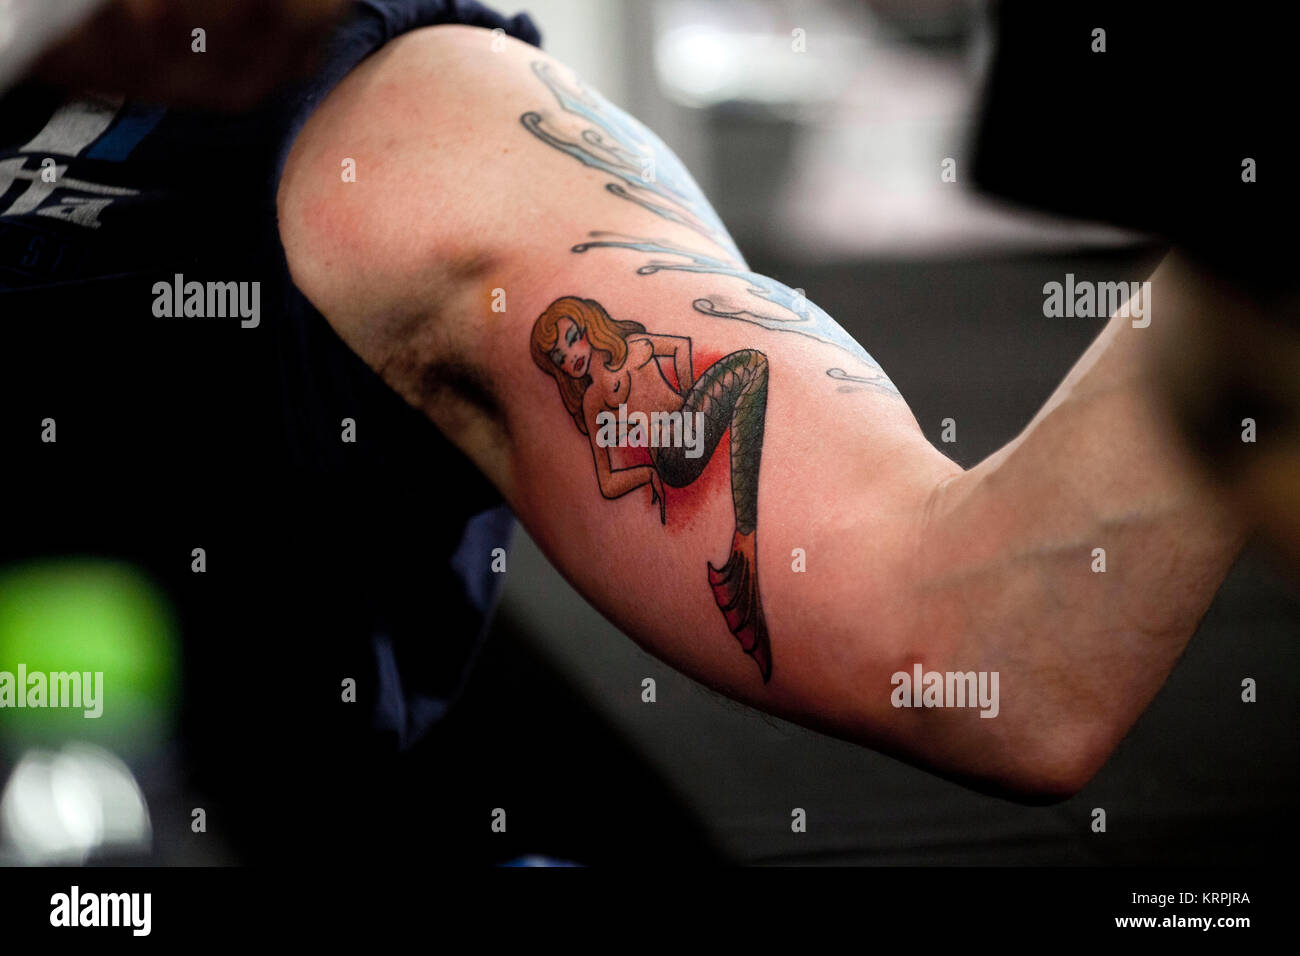 Maximilian Tattoo : Tattoos : Myth : COLOR ZOMBIE MERMAID PIRATE UNDERWATER SLEEVE  TATTOO exterior